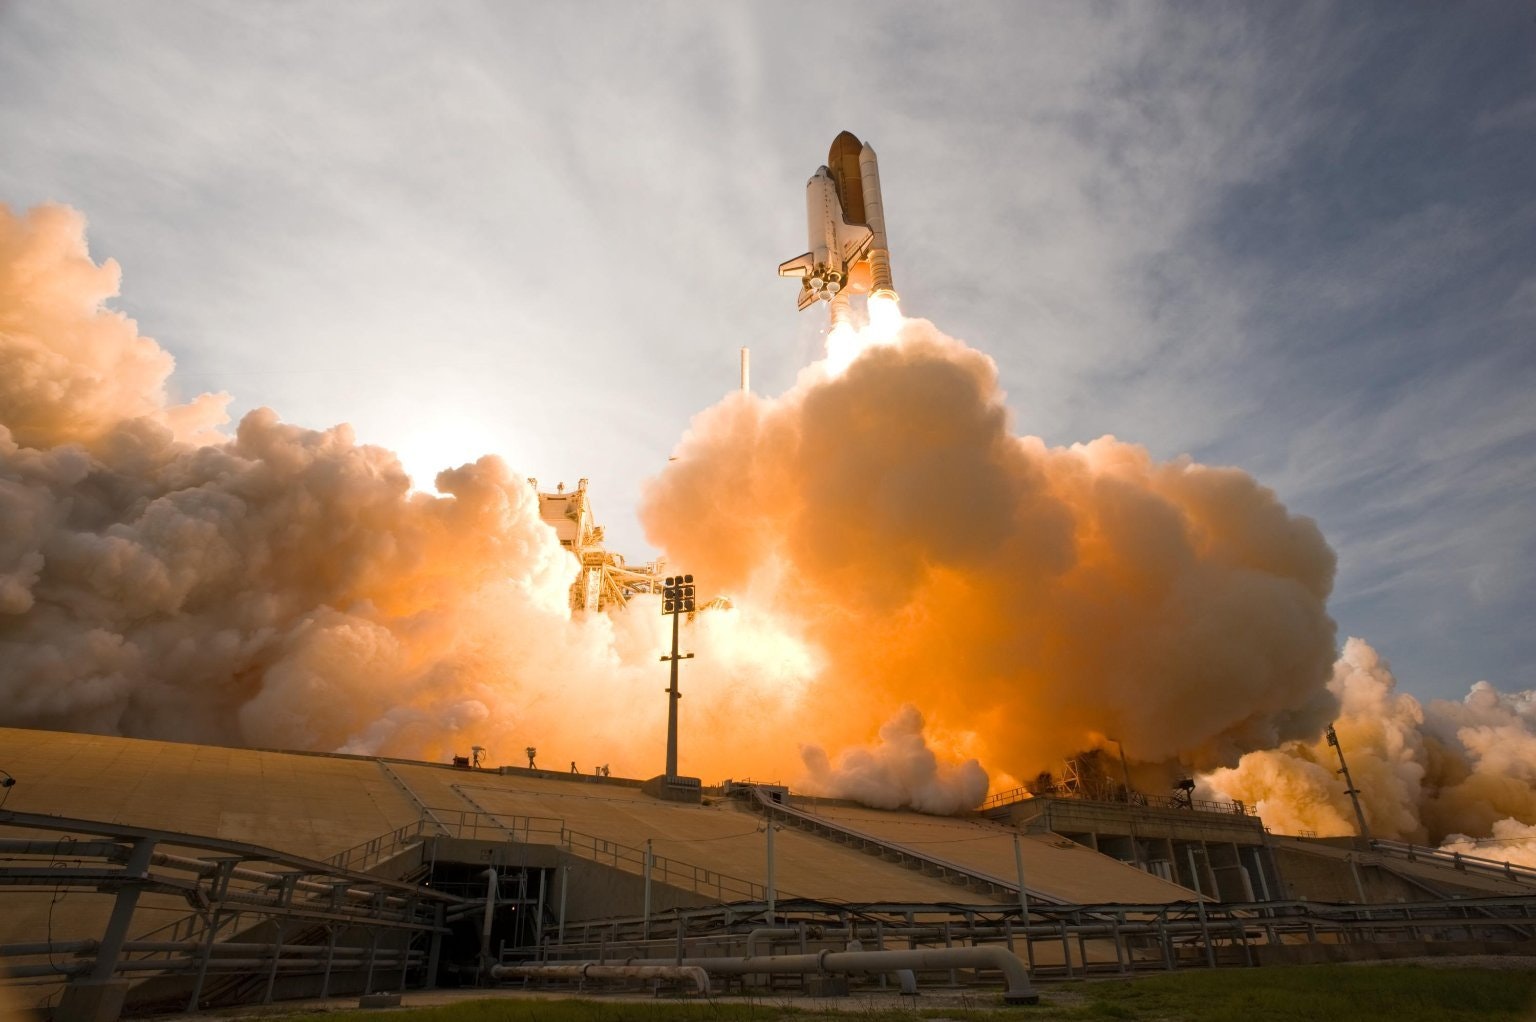 Firefly Aerospace's rocket launcher reaches orbit